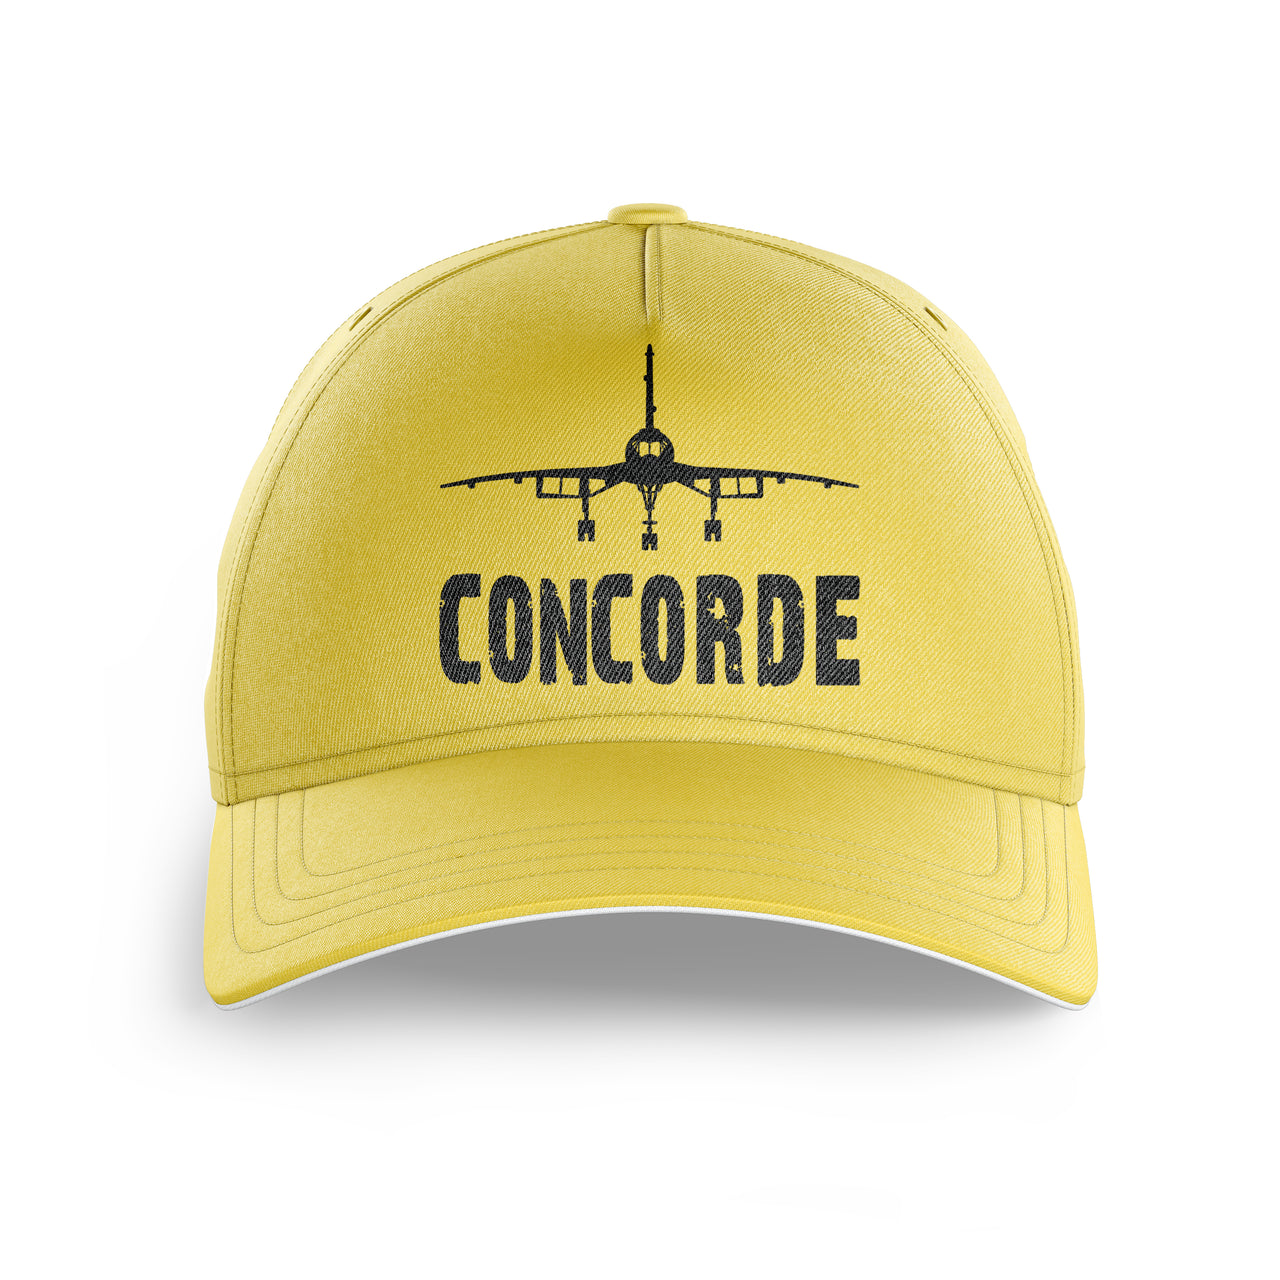 Concorde & Plane Printed Hats